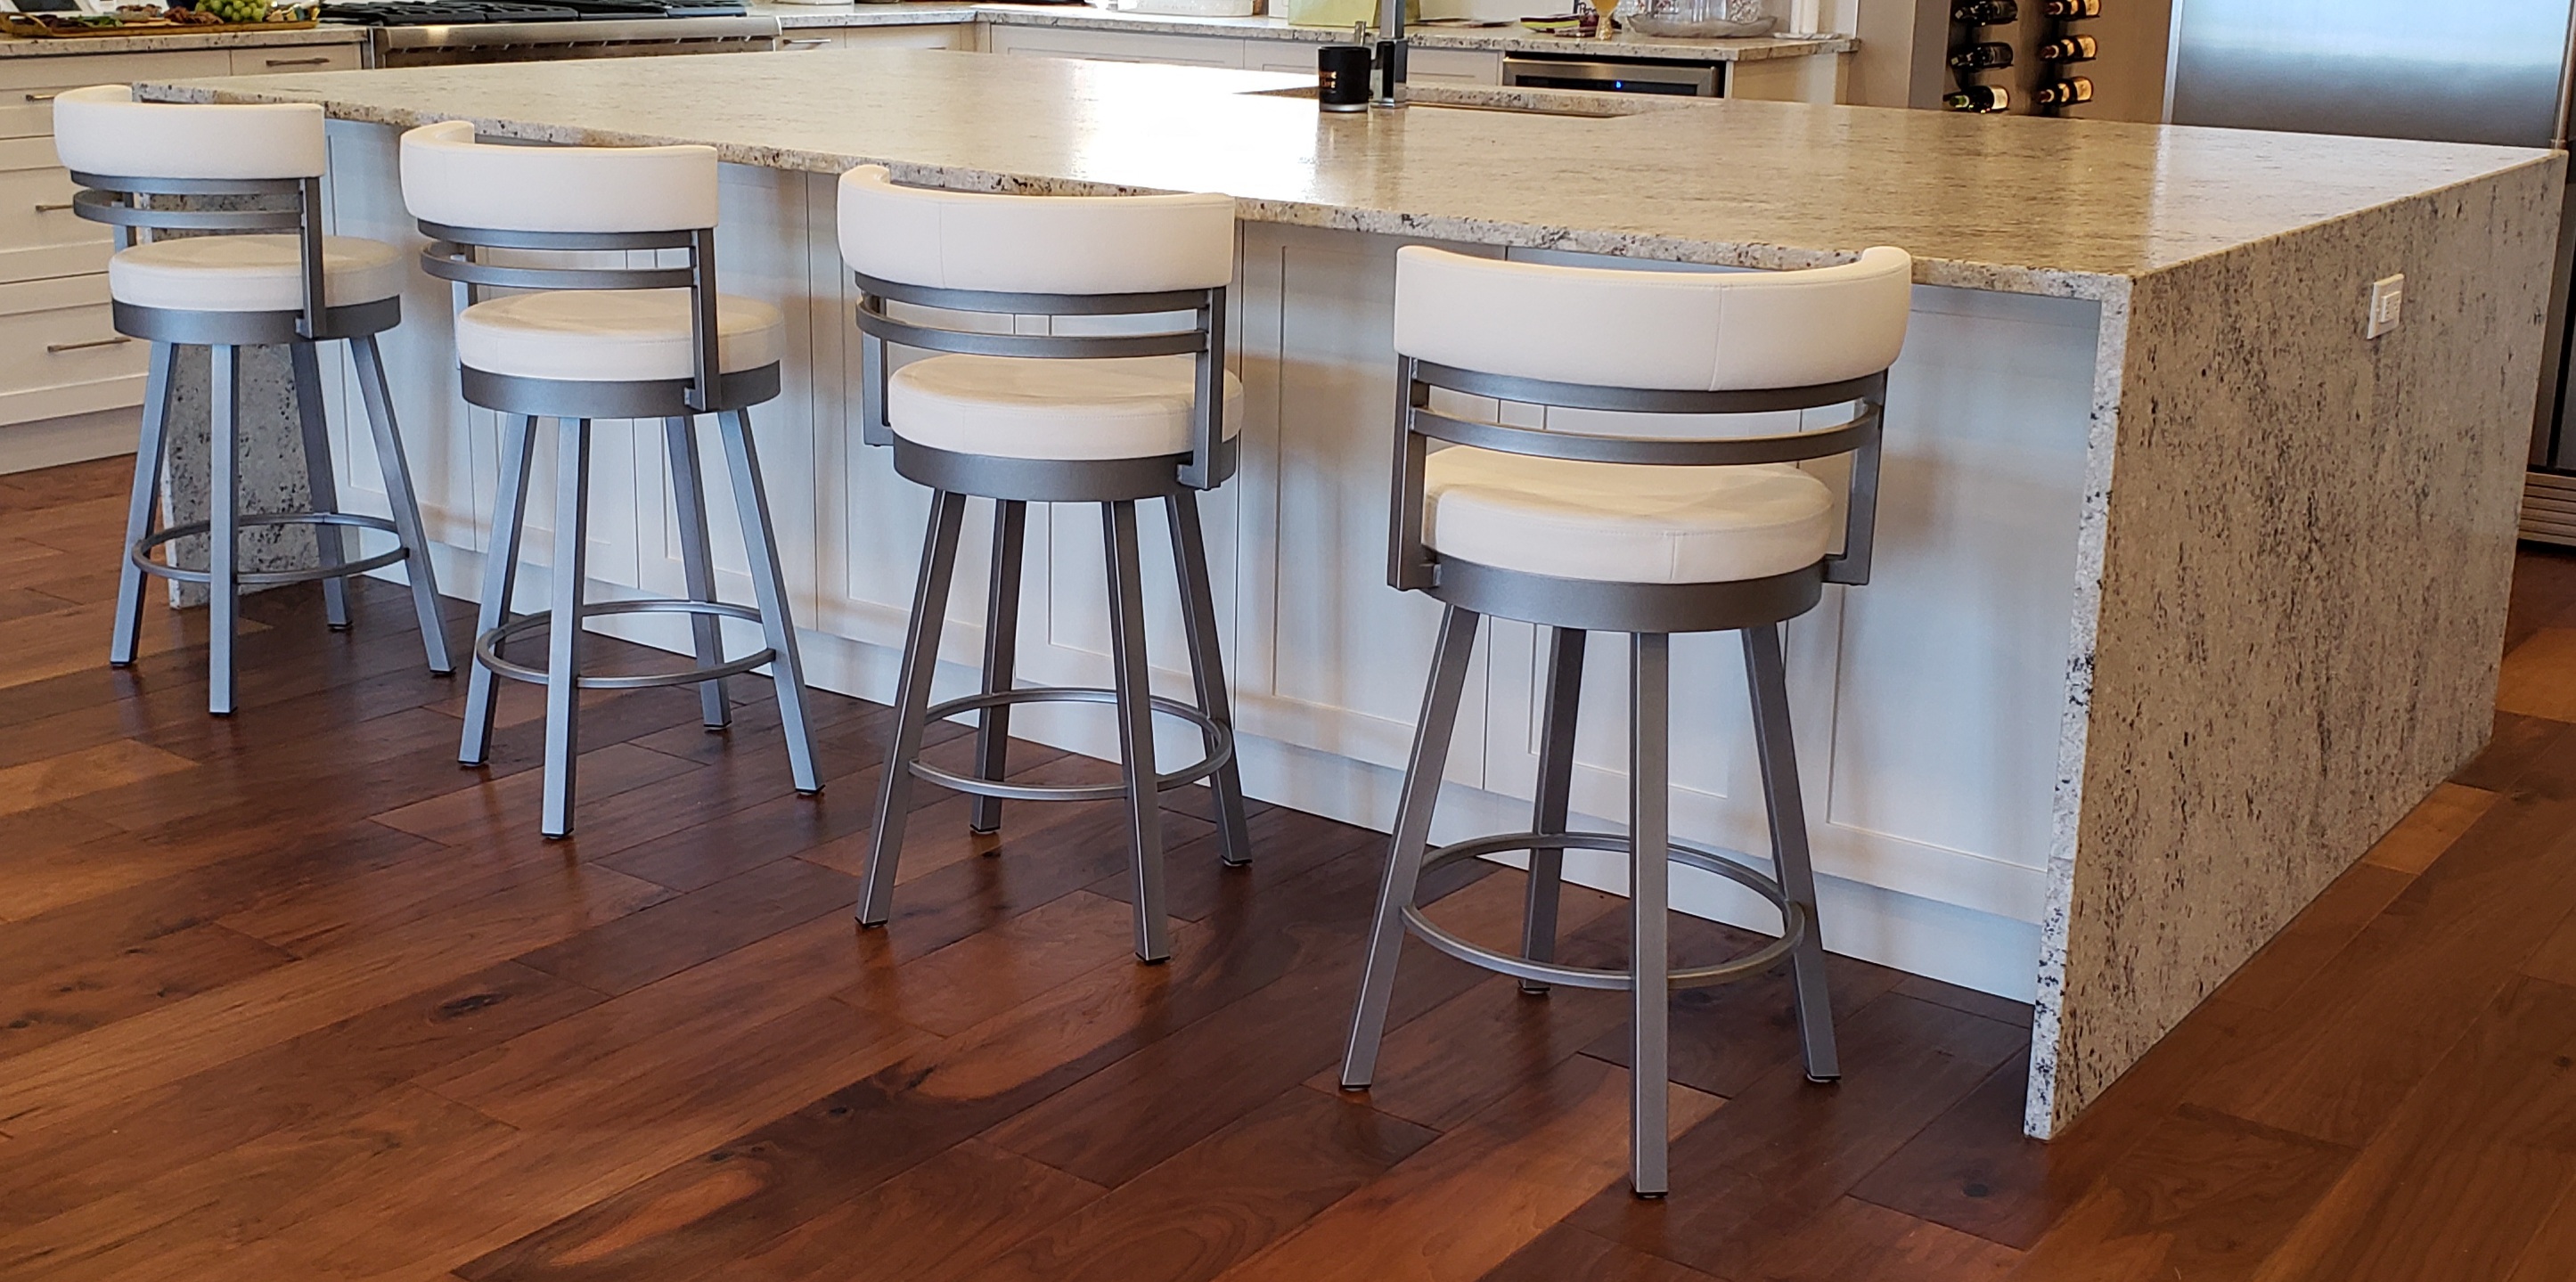 white kitchen bar stools with backs